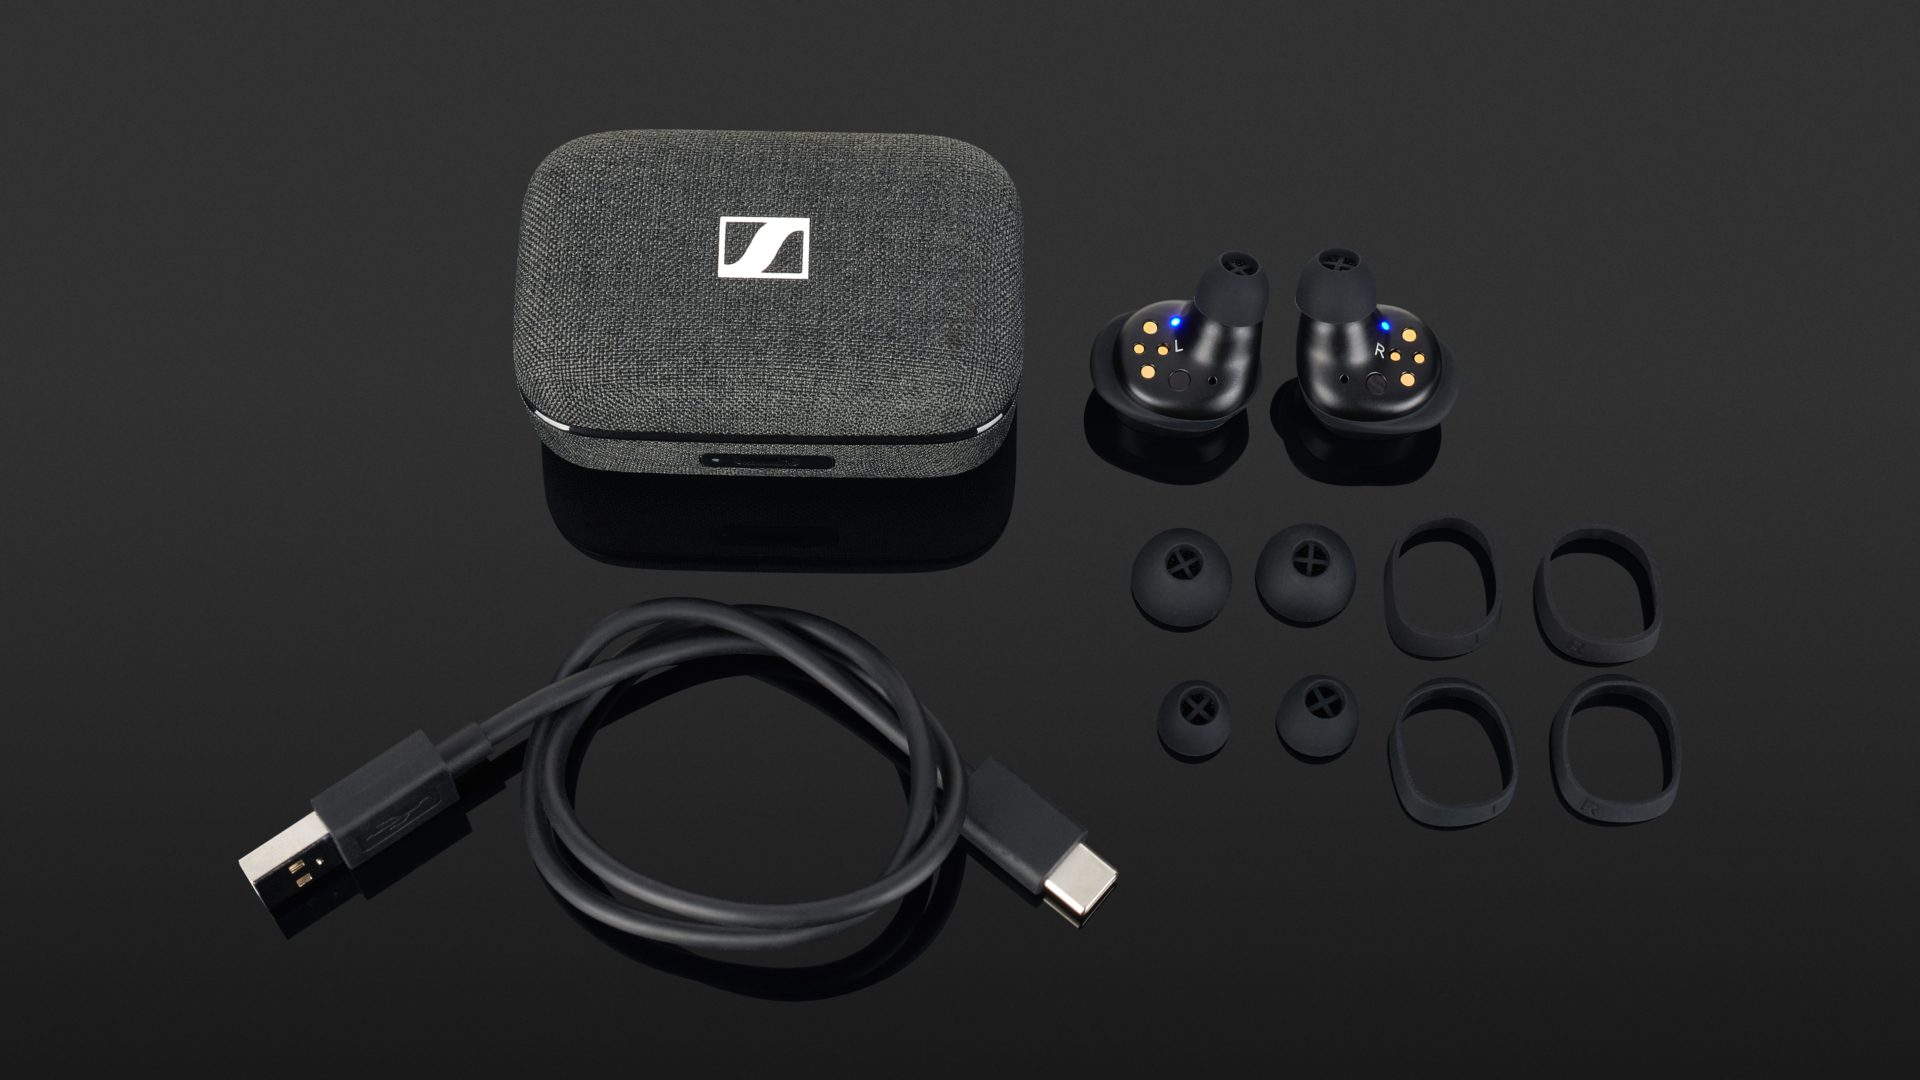 Sennheiser Momentum True Wireless 3 Review | headphonecheck.com